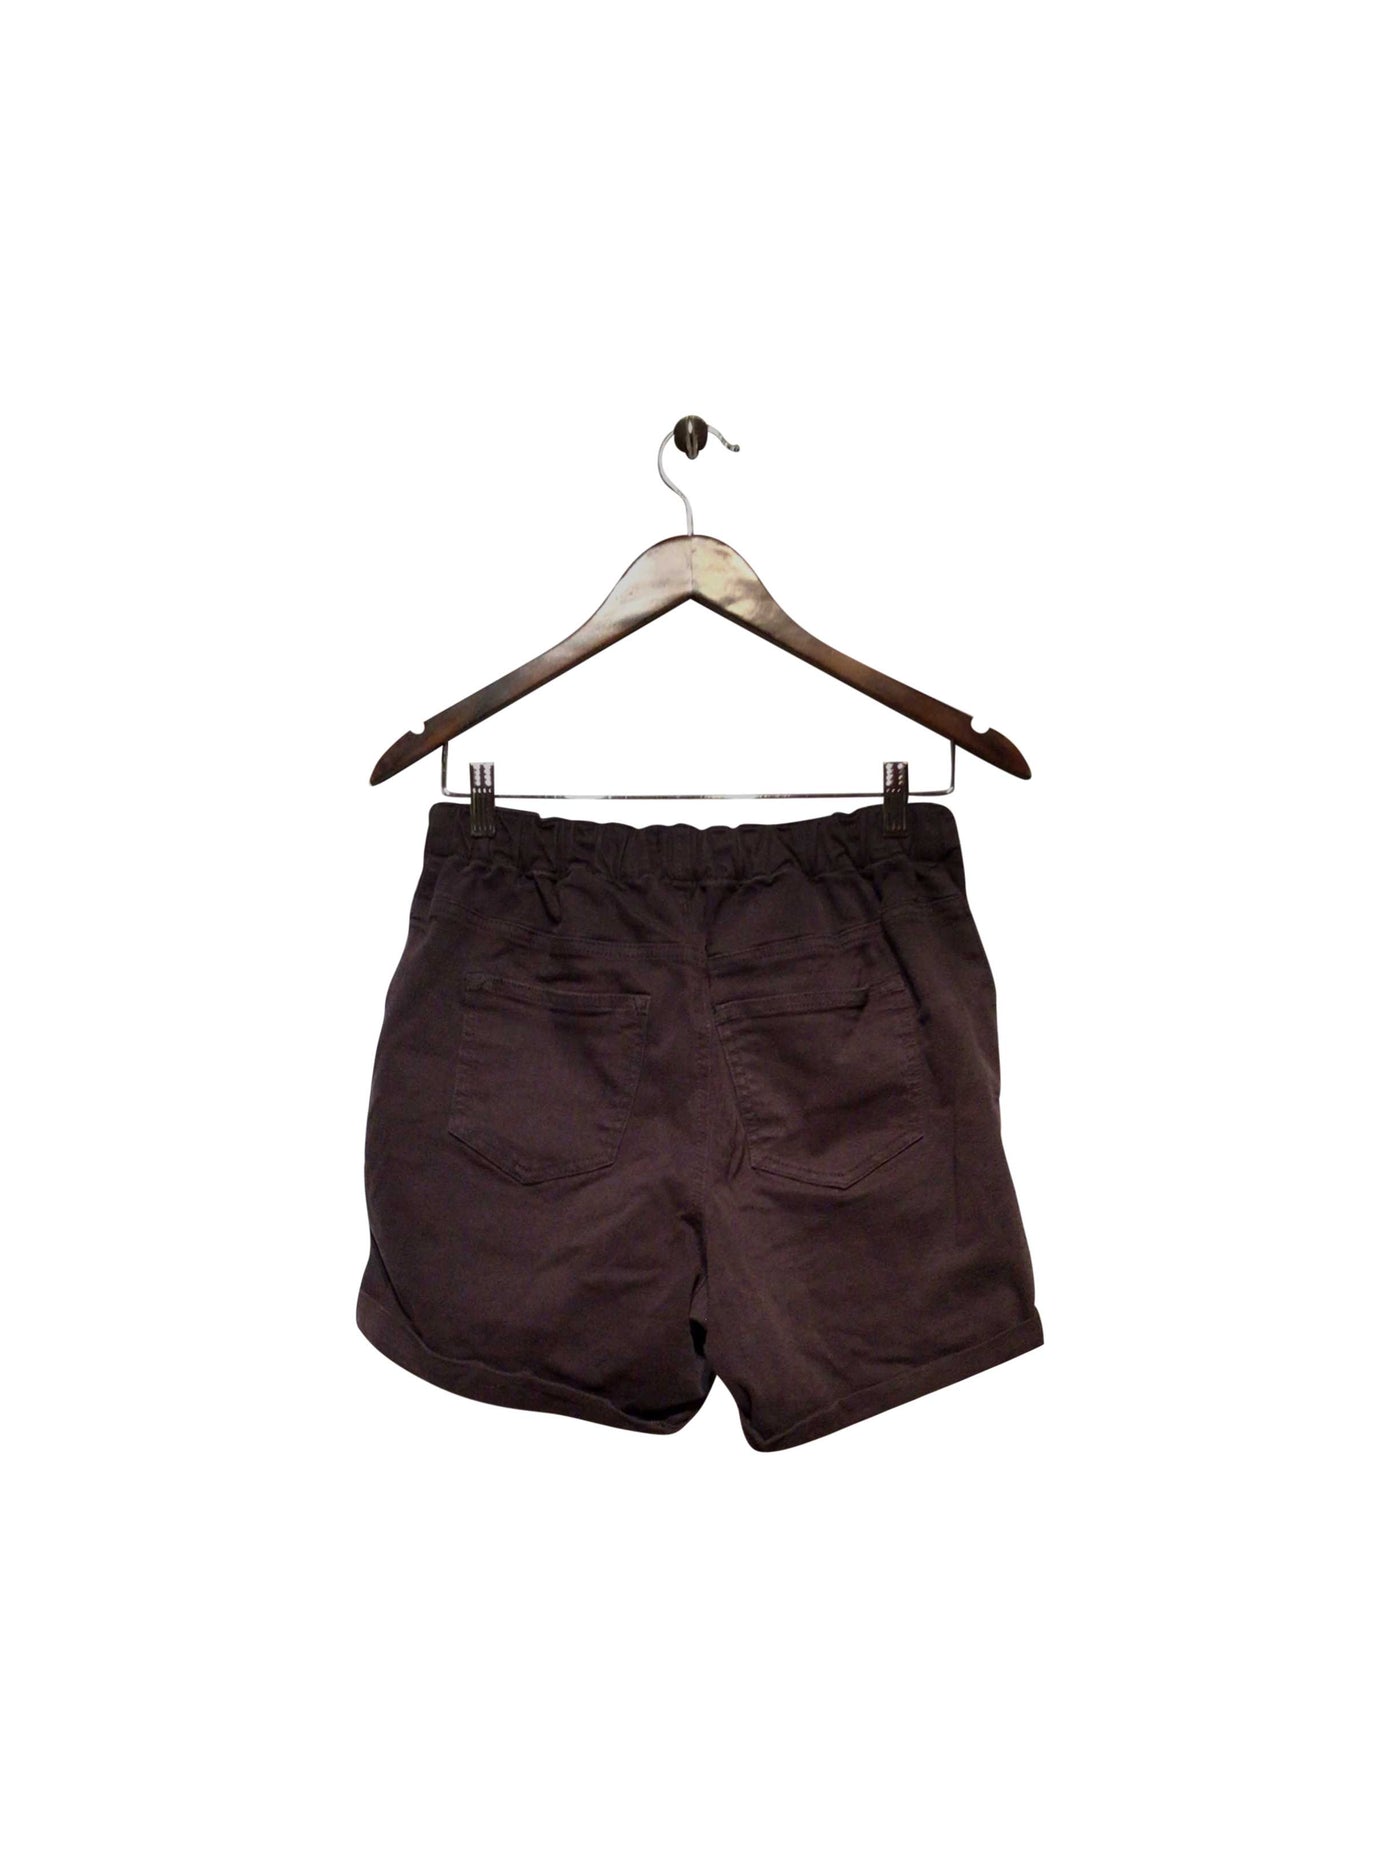 UNBRANDED Regular fit Pant Shorts in Black  -  28  7.99 Koop